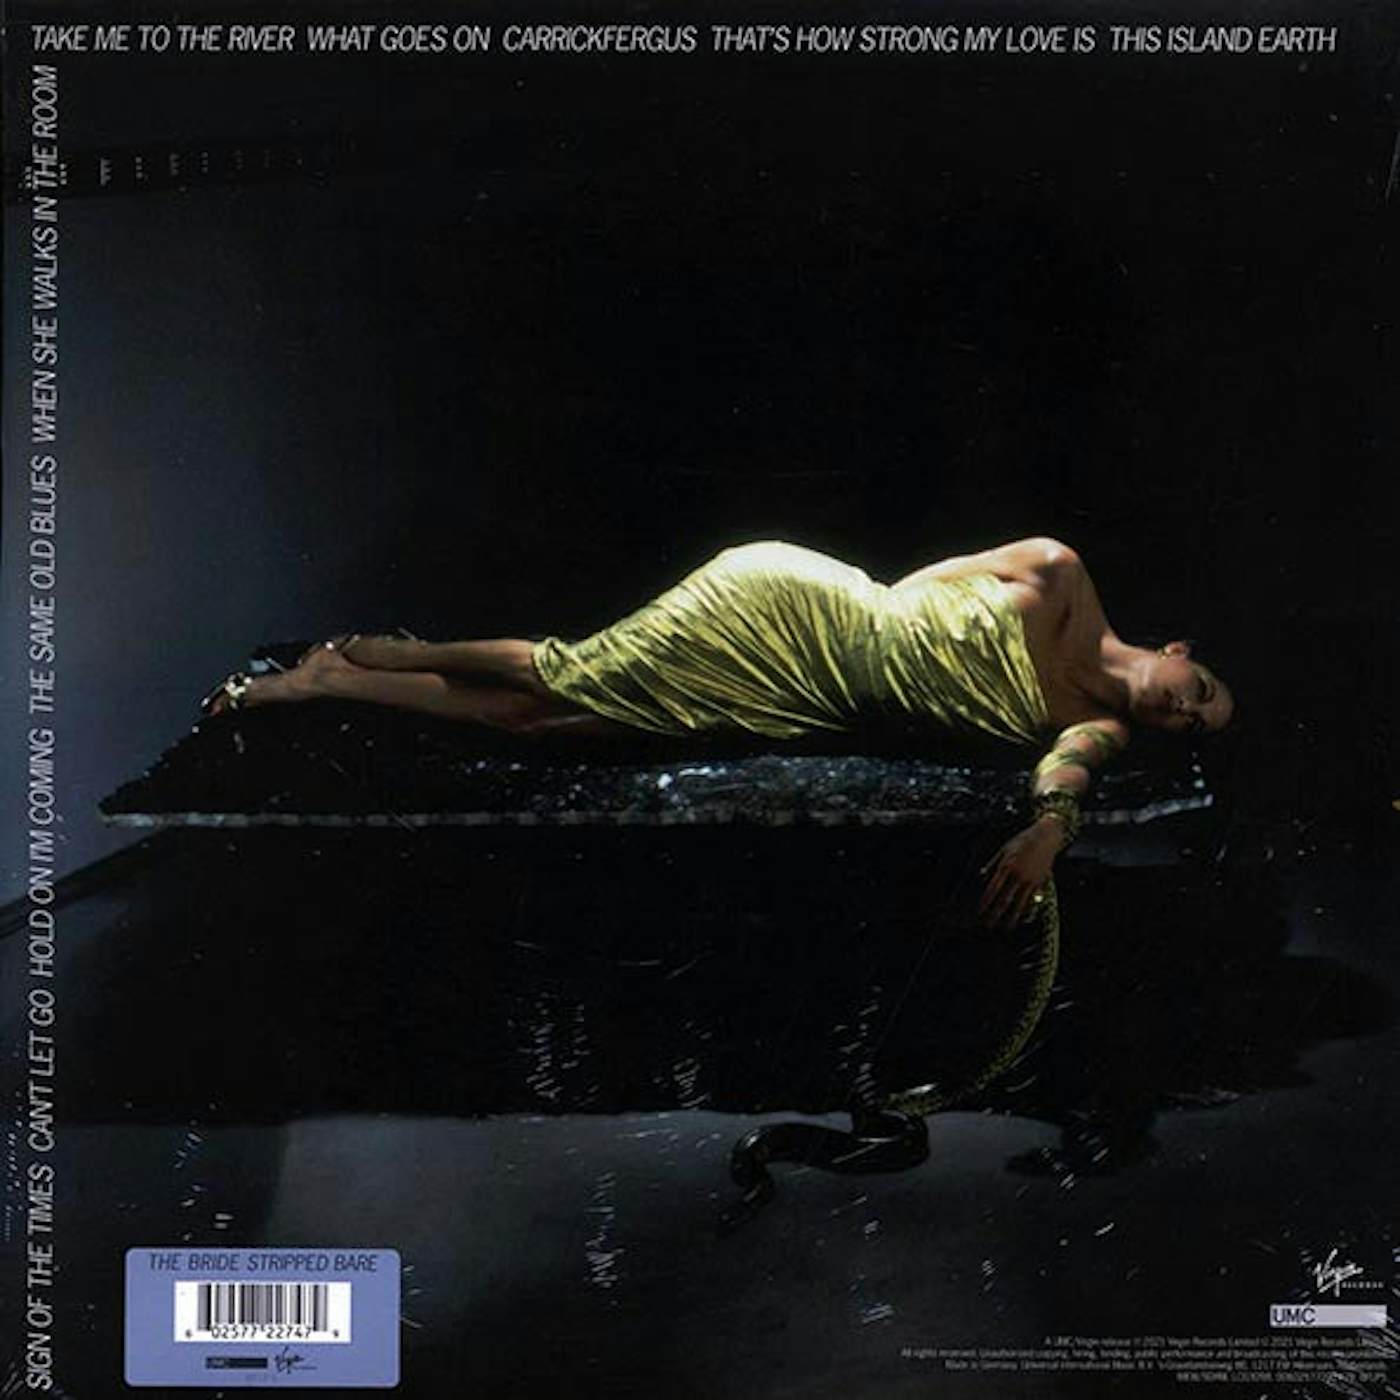 Bryan Ferry  LP -  The Bride Stripped Bare (180g) (remastered) (Vinyl)